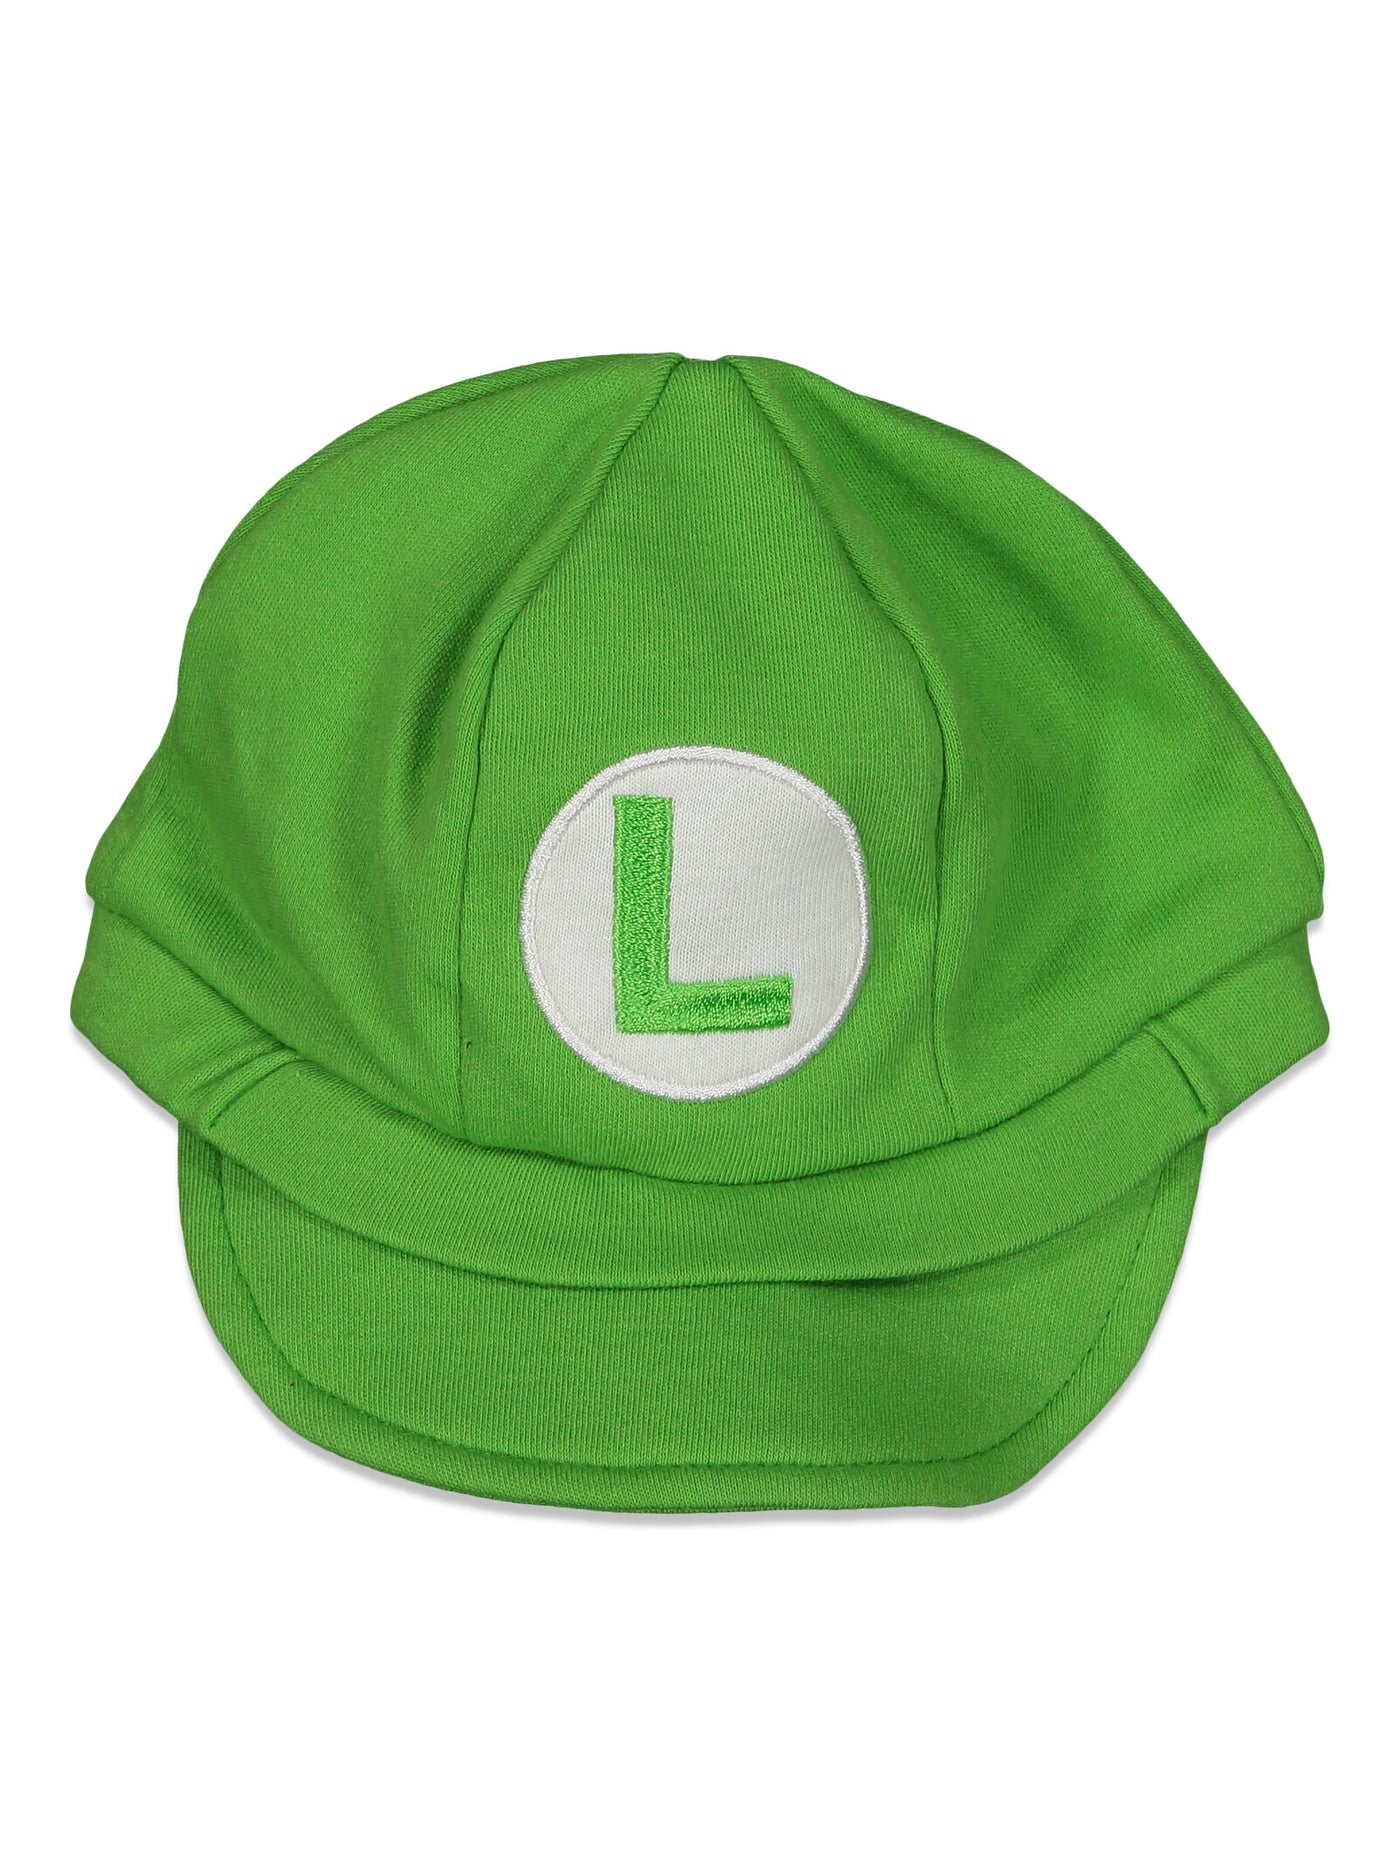 SUPER MARIO Nintendo Luigi Cosplay Bodysuit and Hat Set